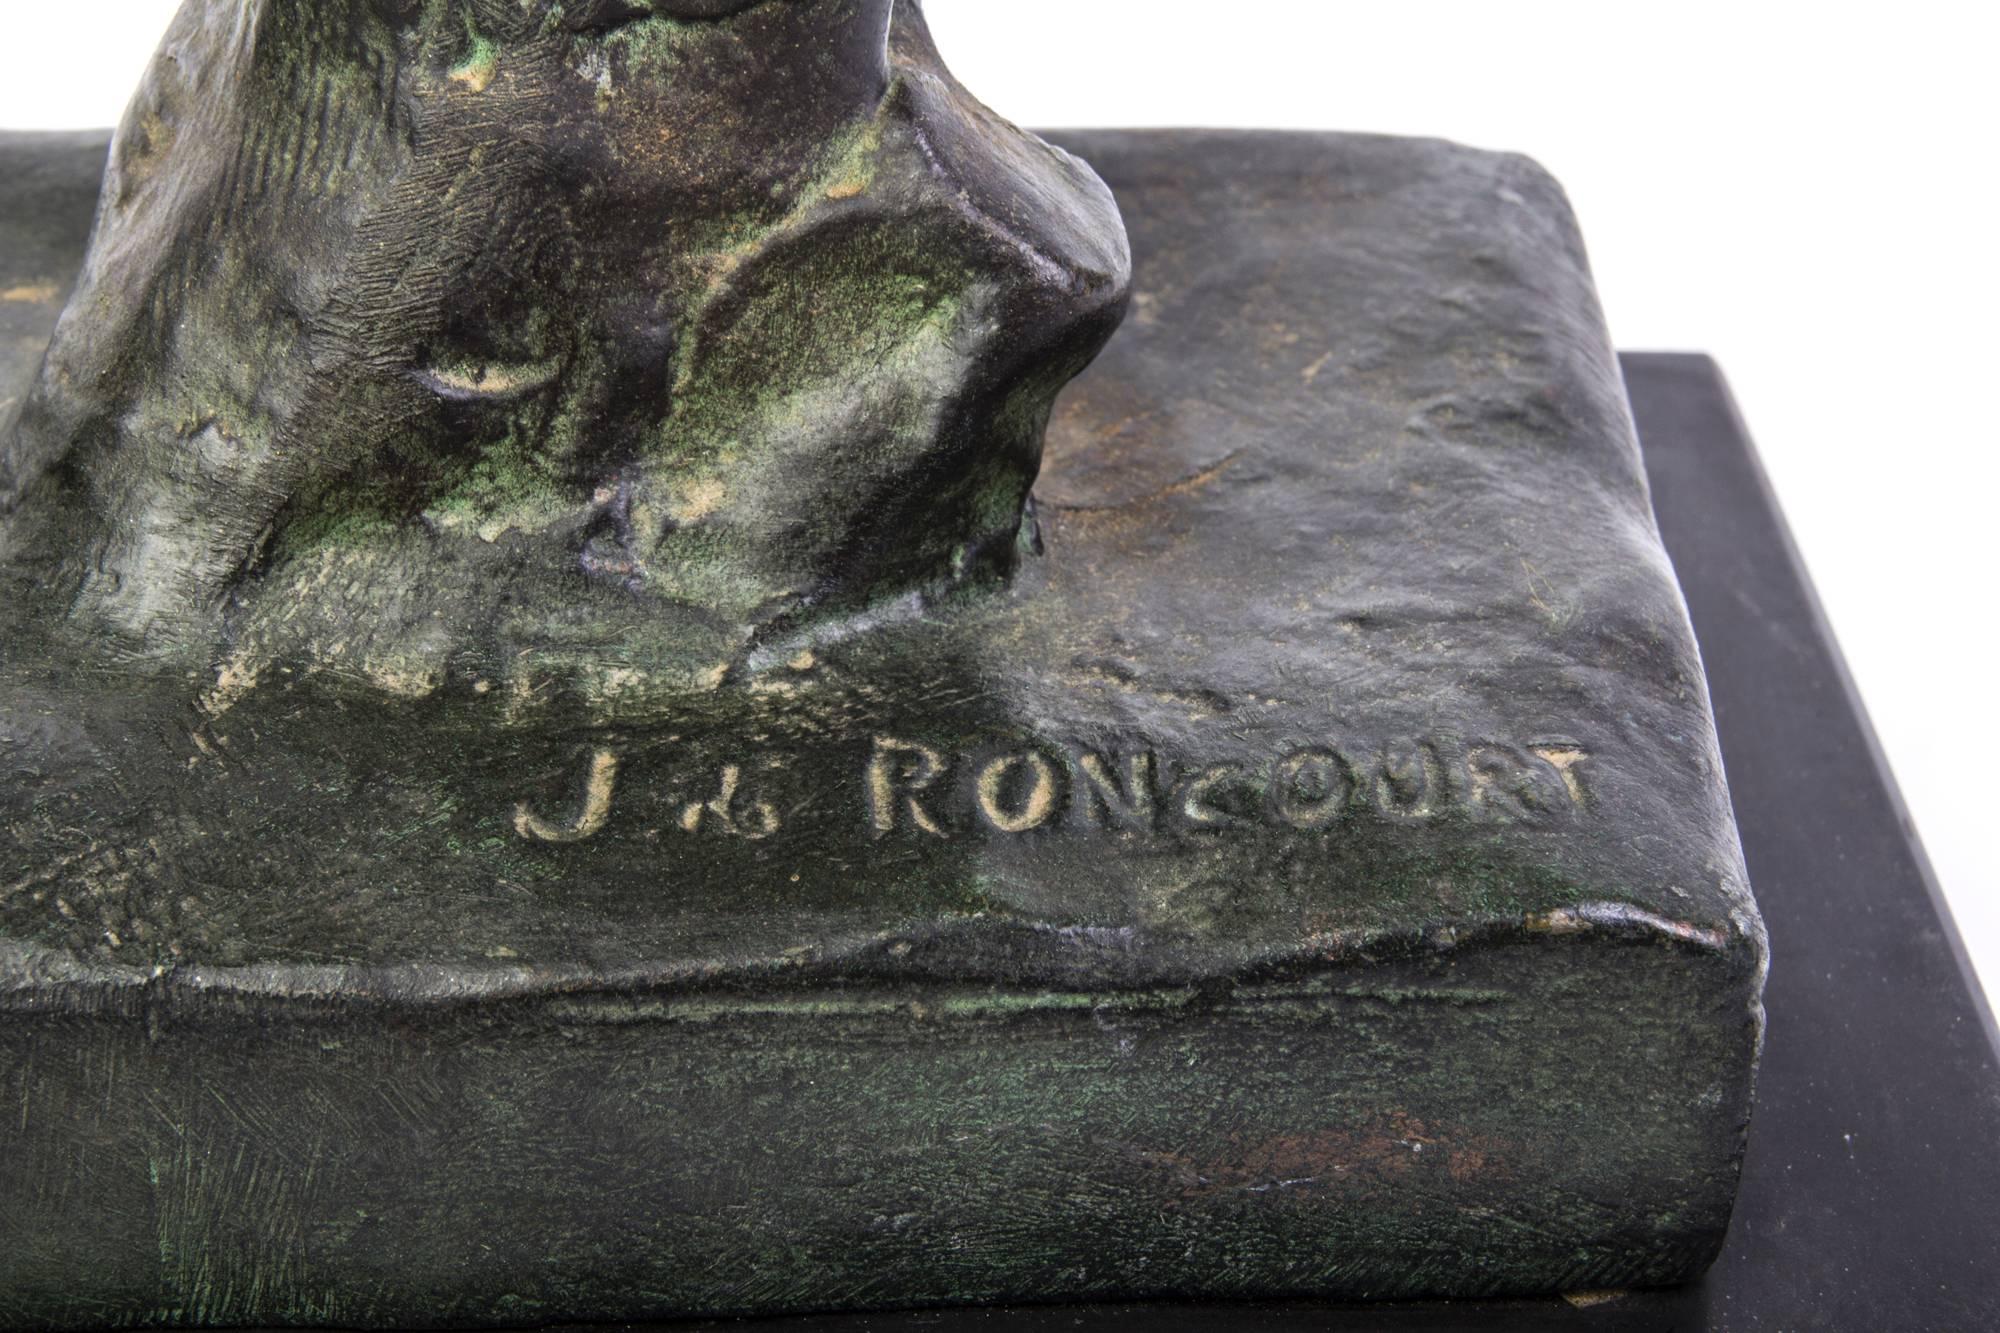 John Roncourt Statue Art Deco 